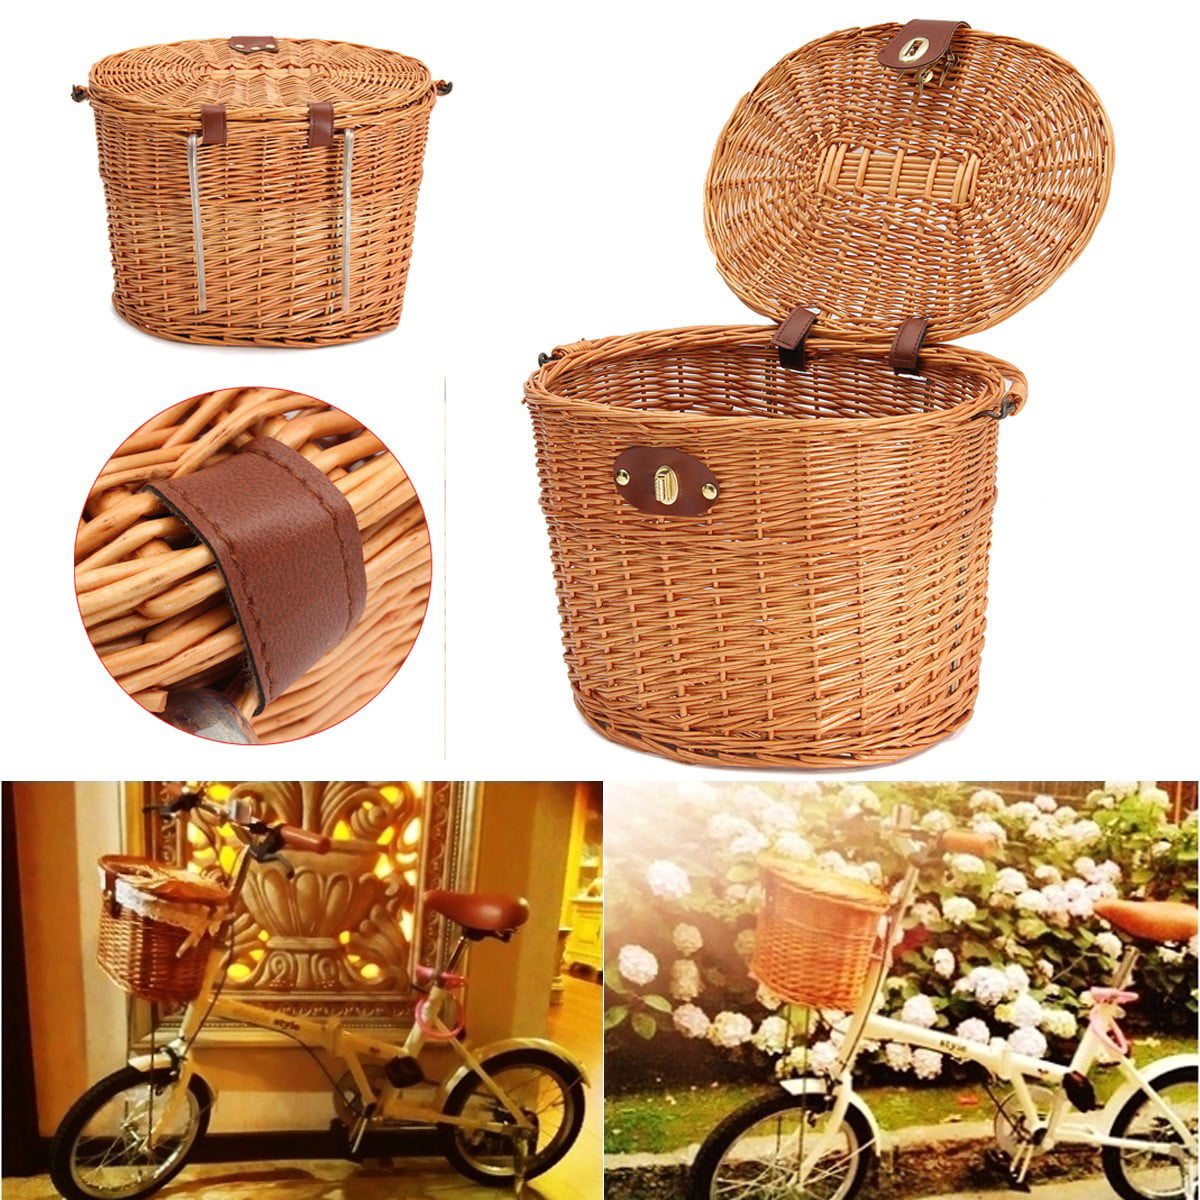 Wicker D-Shaped Bike Basket Portable Hand-Woven Shopping Basket Folk Craftsmanship Bicycle Storage Basket with Leather Straps iSunday Bicycle Wicker Basket